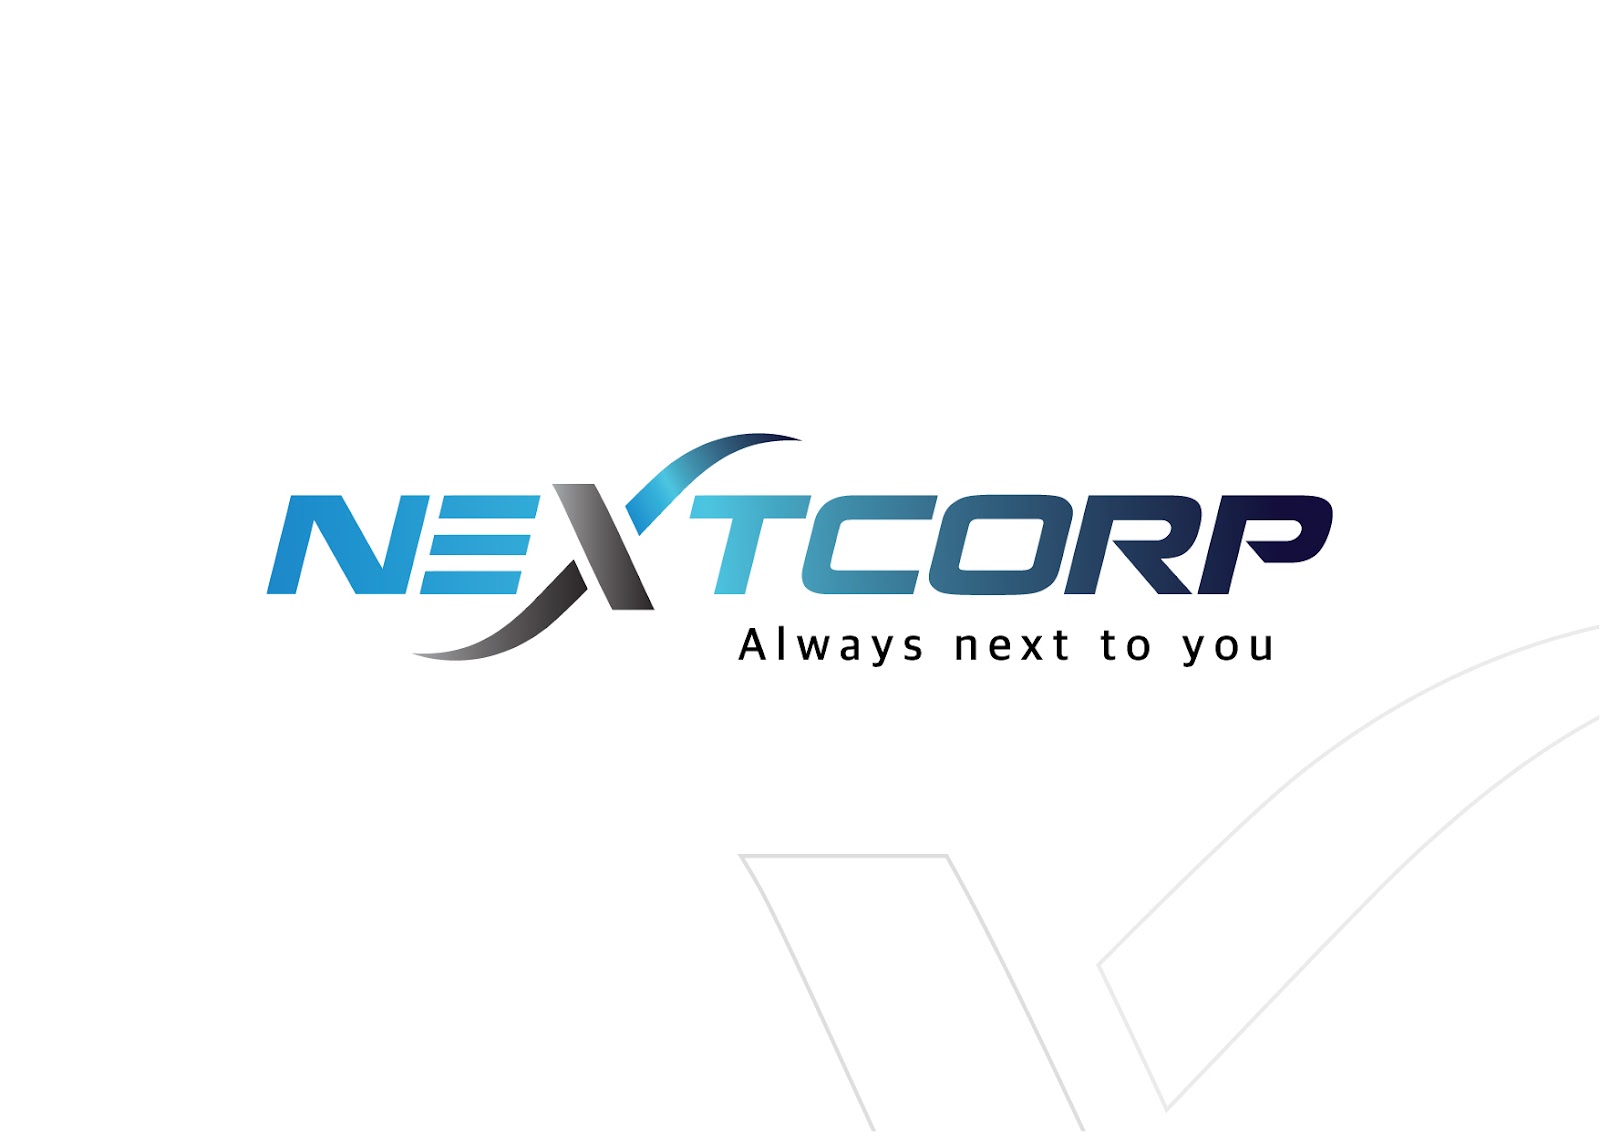 Nextcorp-01 (1).jpg